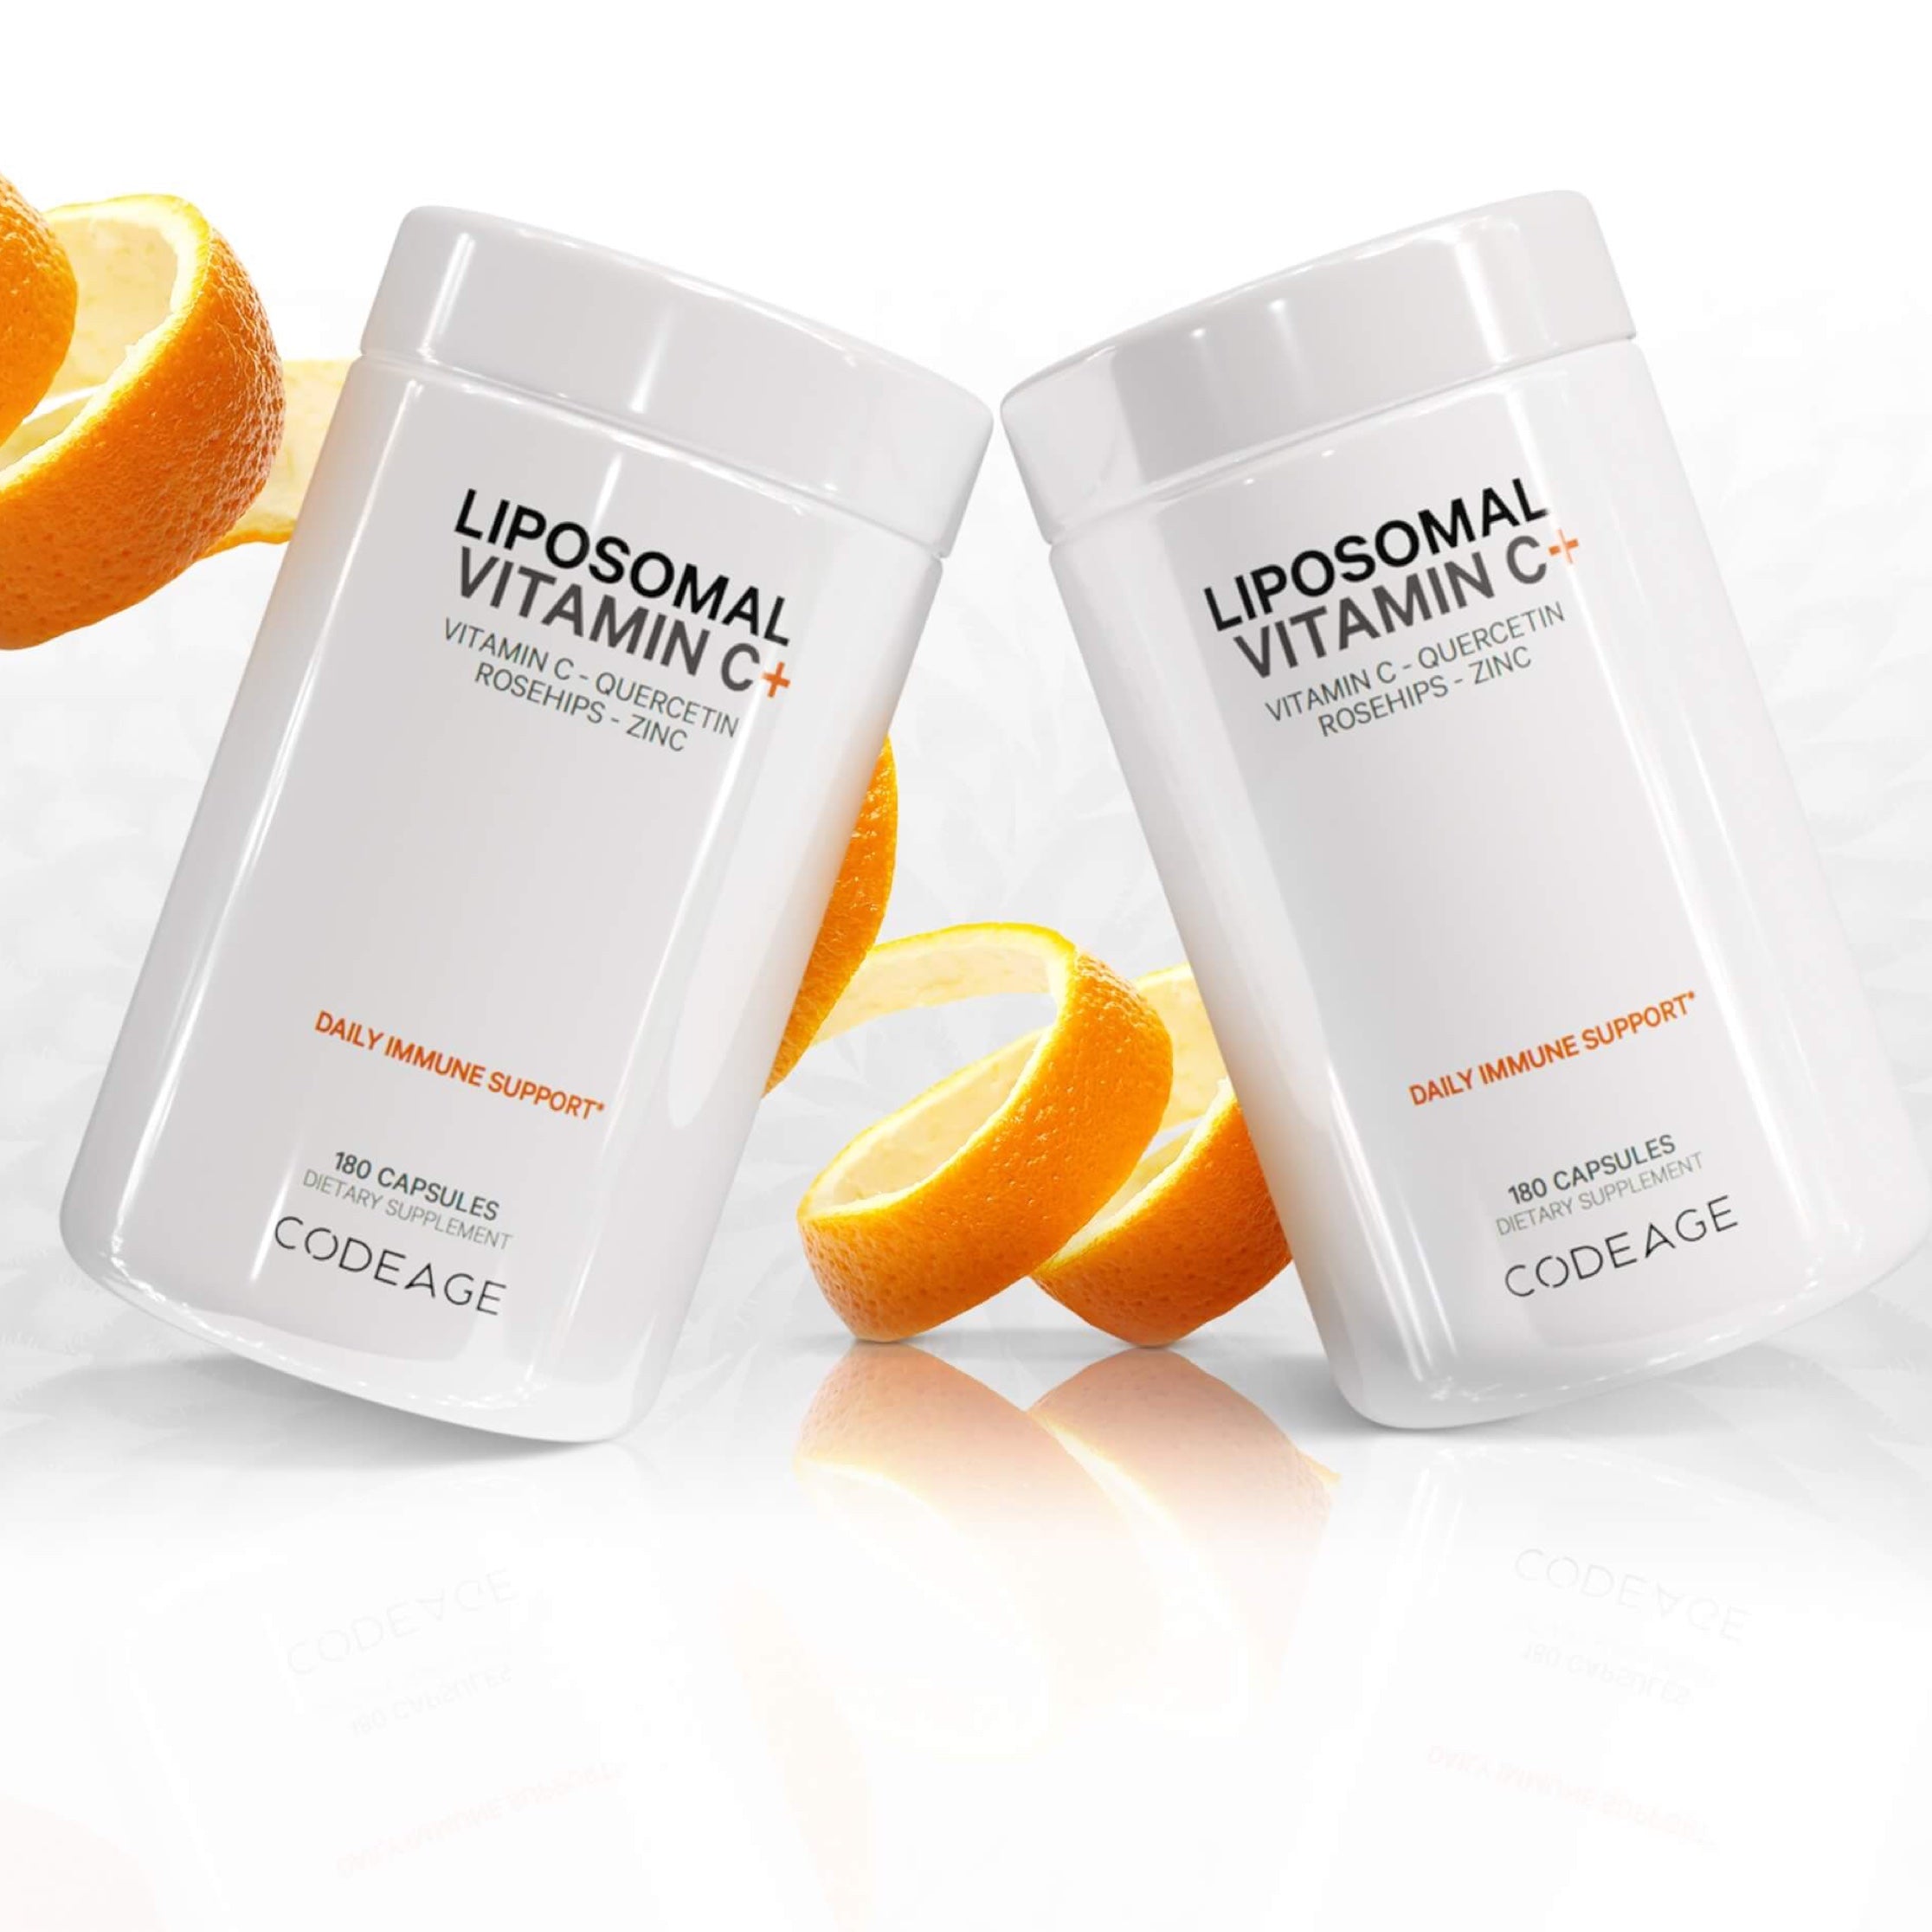 Liposomal Vitamin C Product